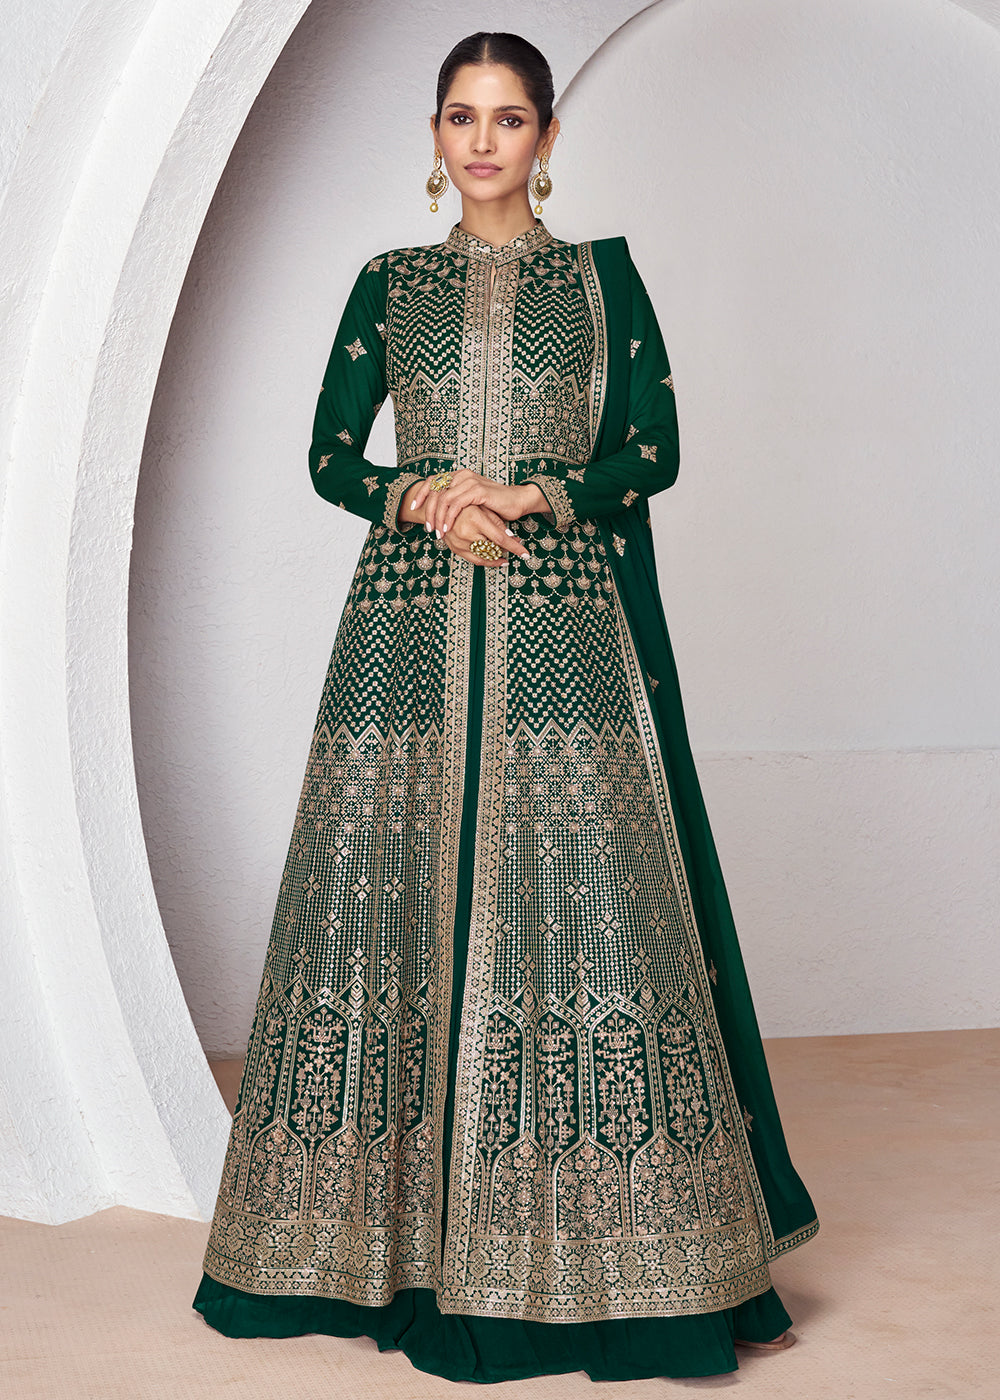 Buy Now Wedding Wear Forest Green Lehenga Skirt Anarkali Suit Online in USA, UK, Australia, New Zealand, Canada & Worldwide at Empress Clothing. 